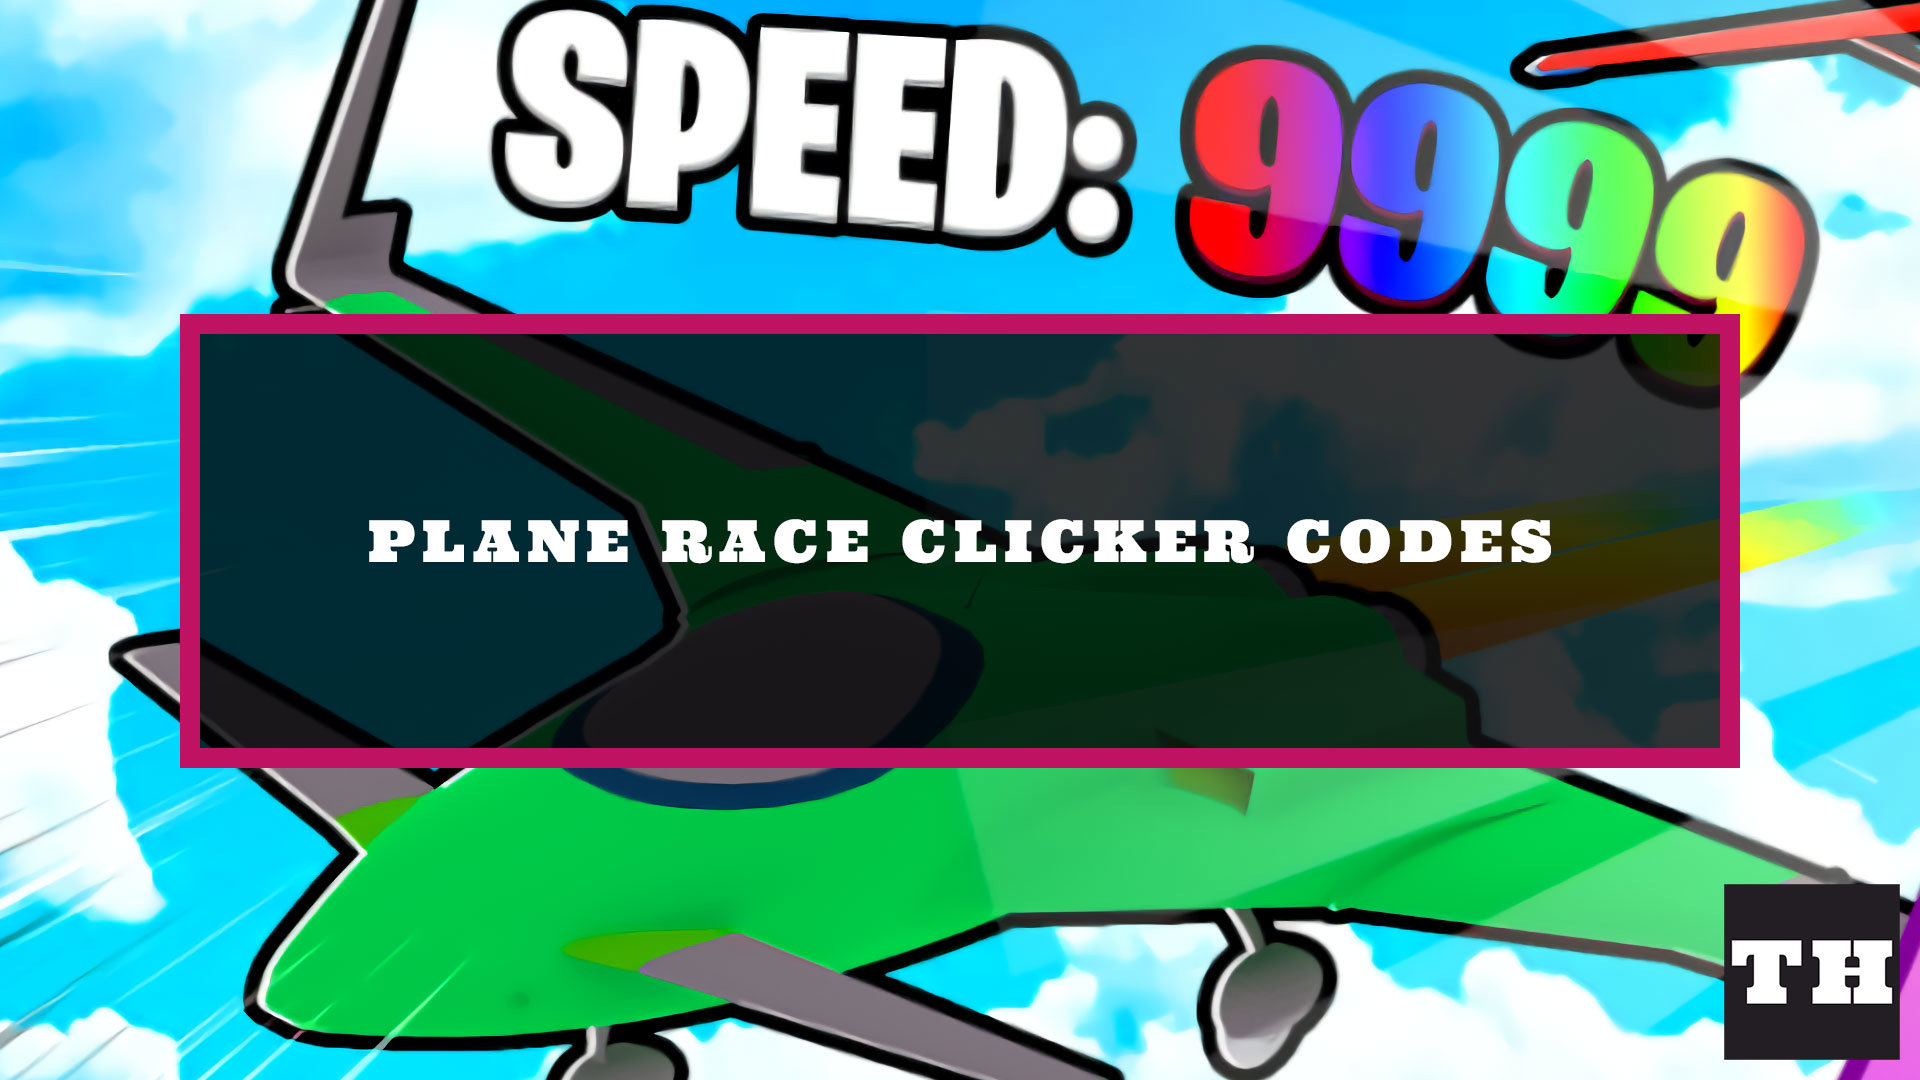 Anime Racing Clicker Codes (December 2023)